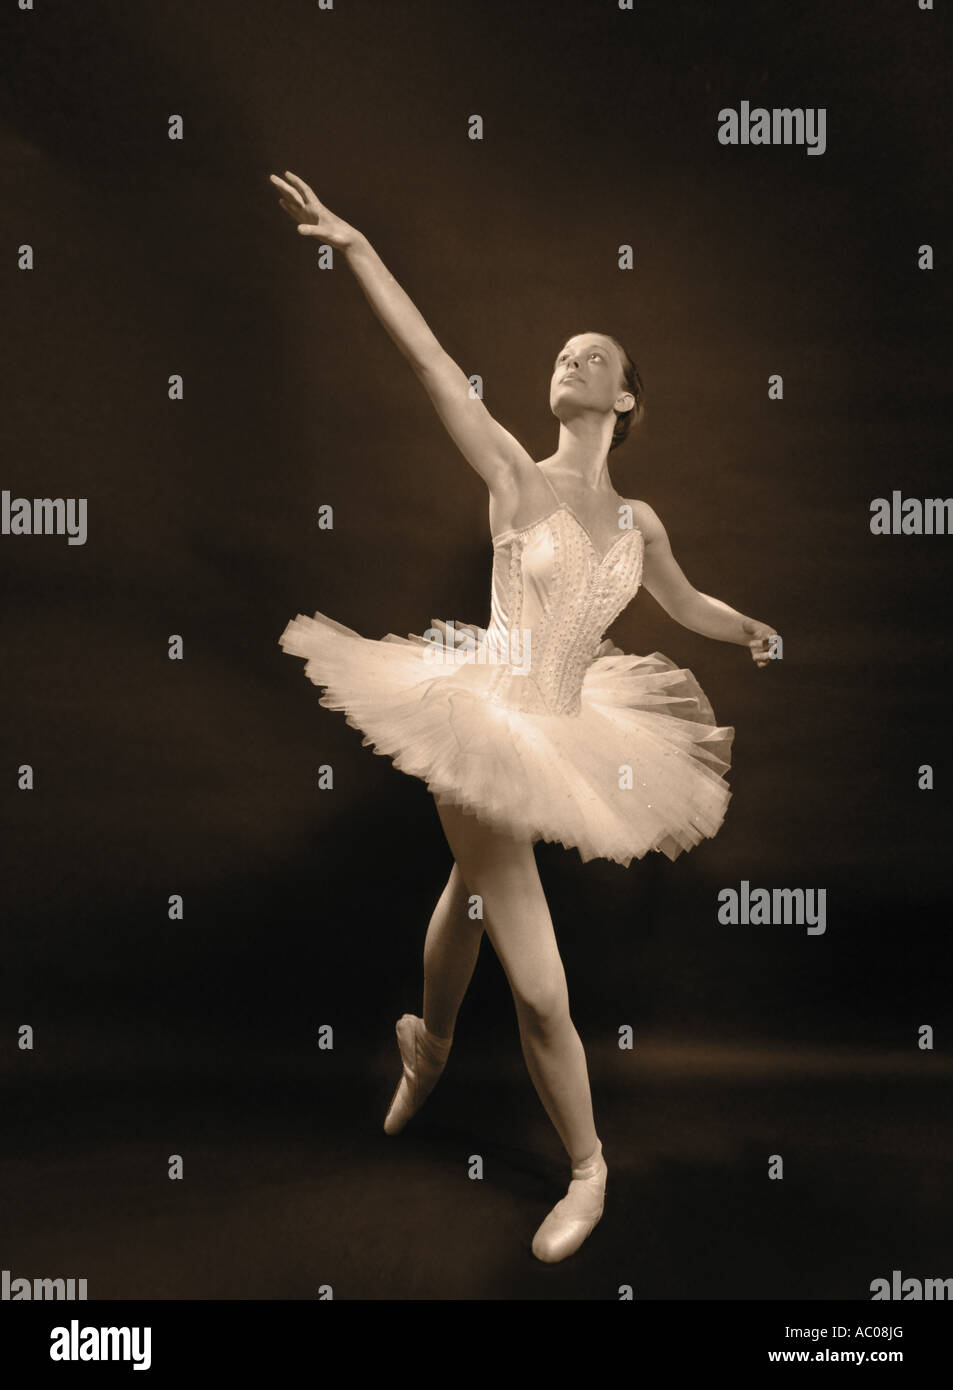 prima ballerina] ballet pose dancer female performer Stock Photo - Alamy